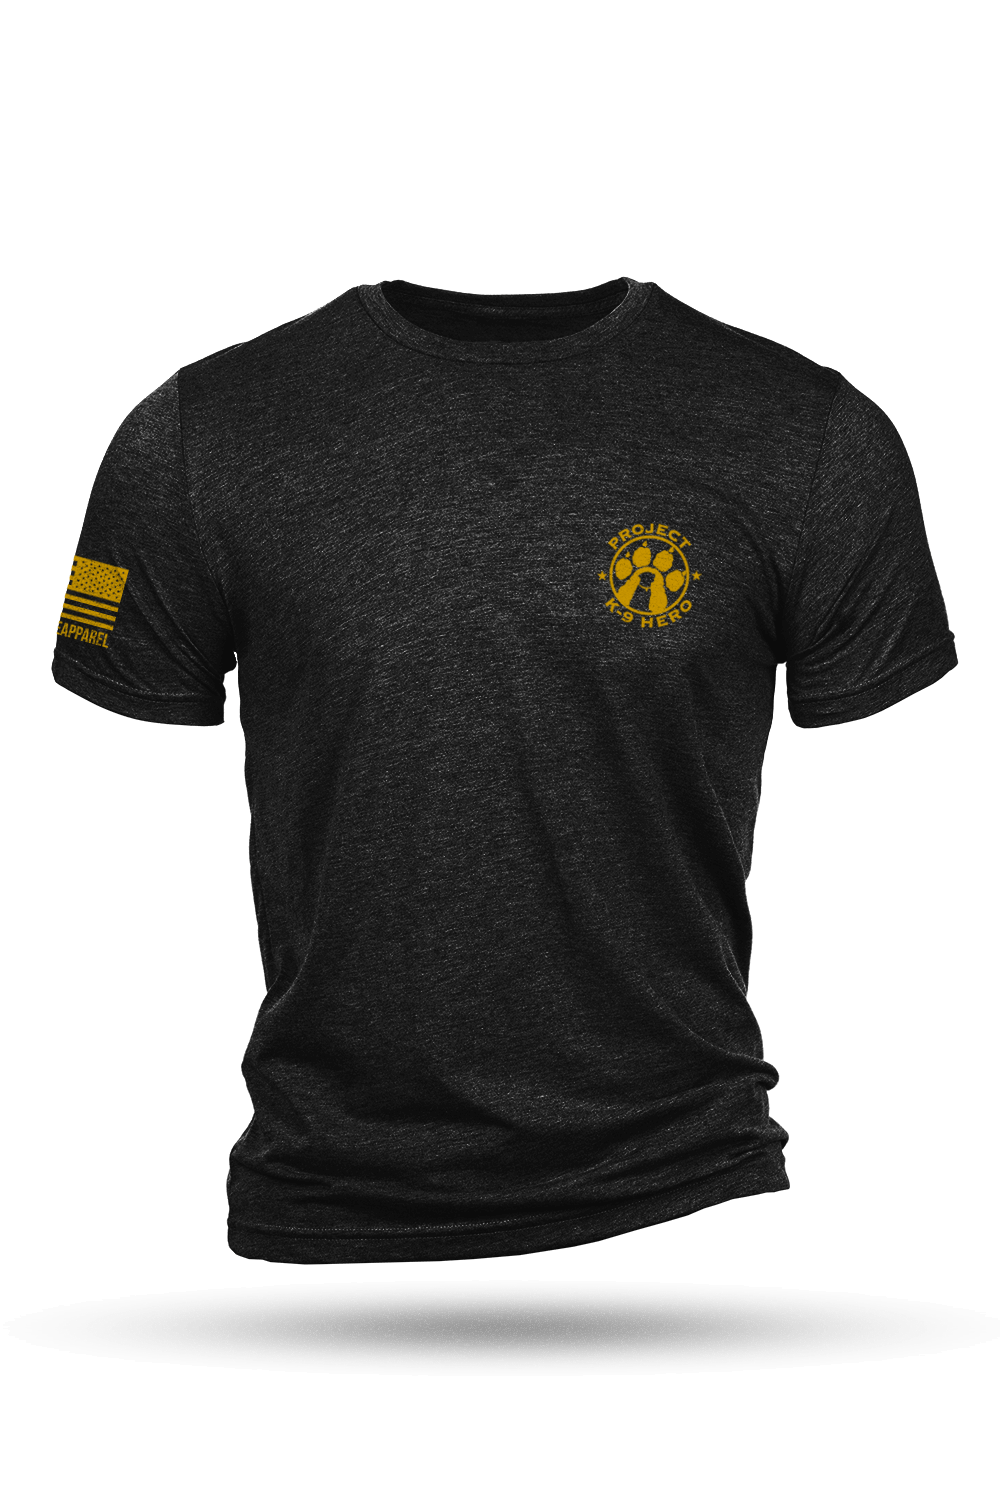 T-Shirt - Project K-9 Hero K-9 Mattis